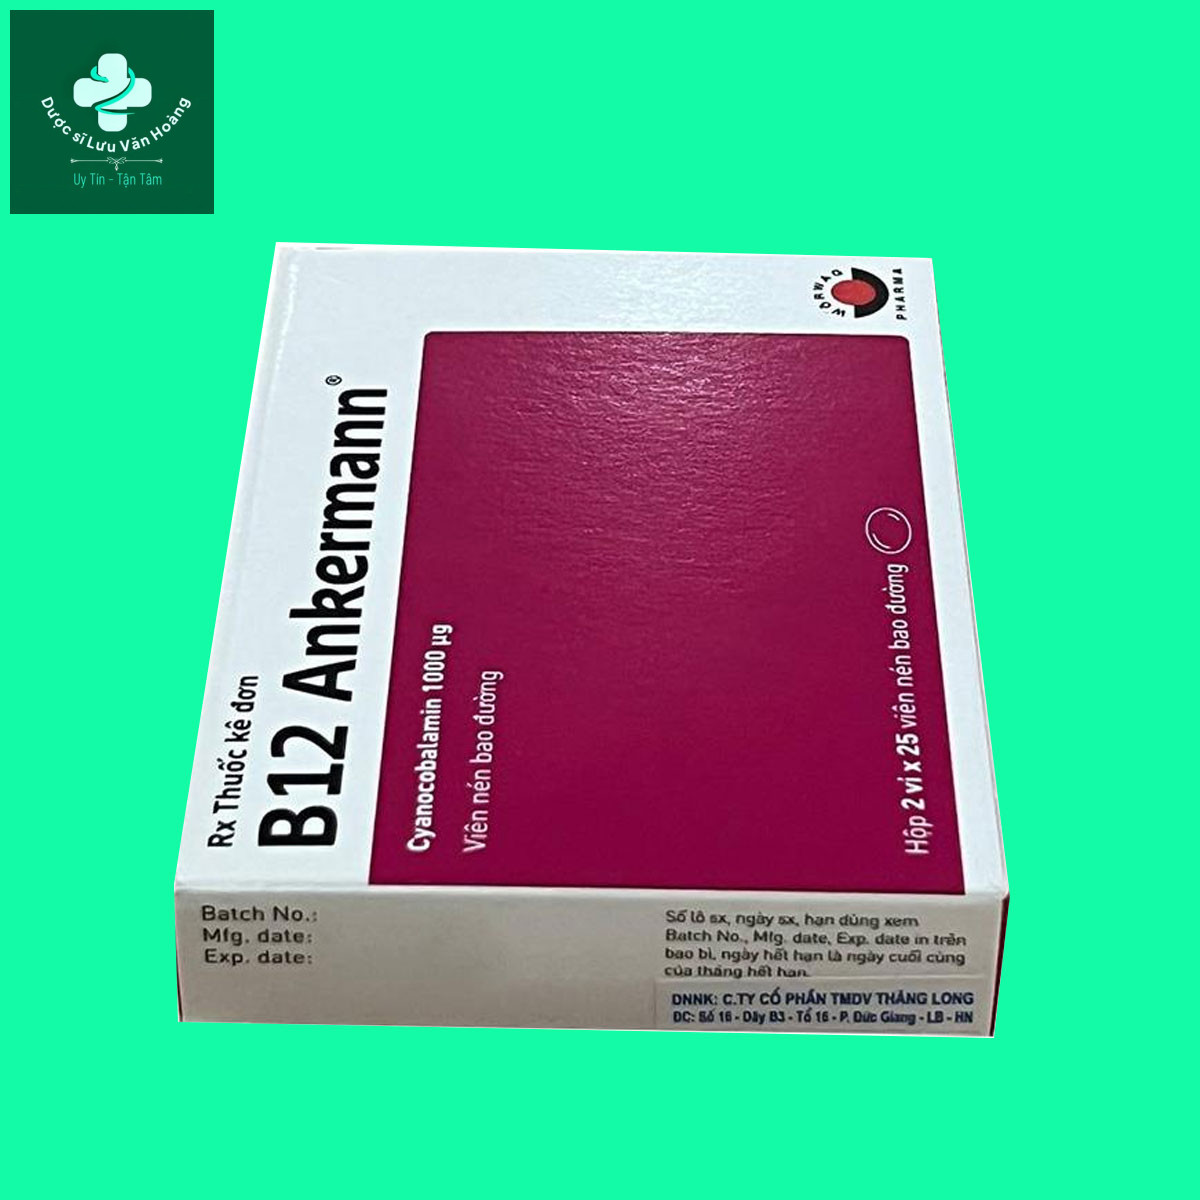 B12 Ankermann - Thuốc điều trị thiếu Vitamin B12